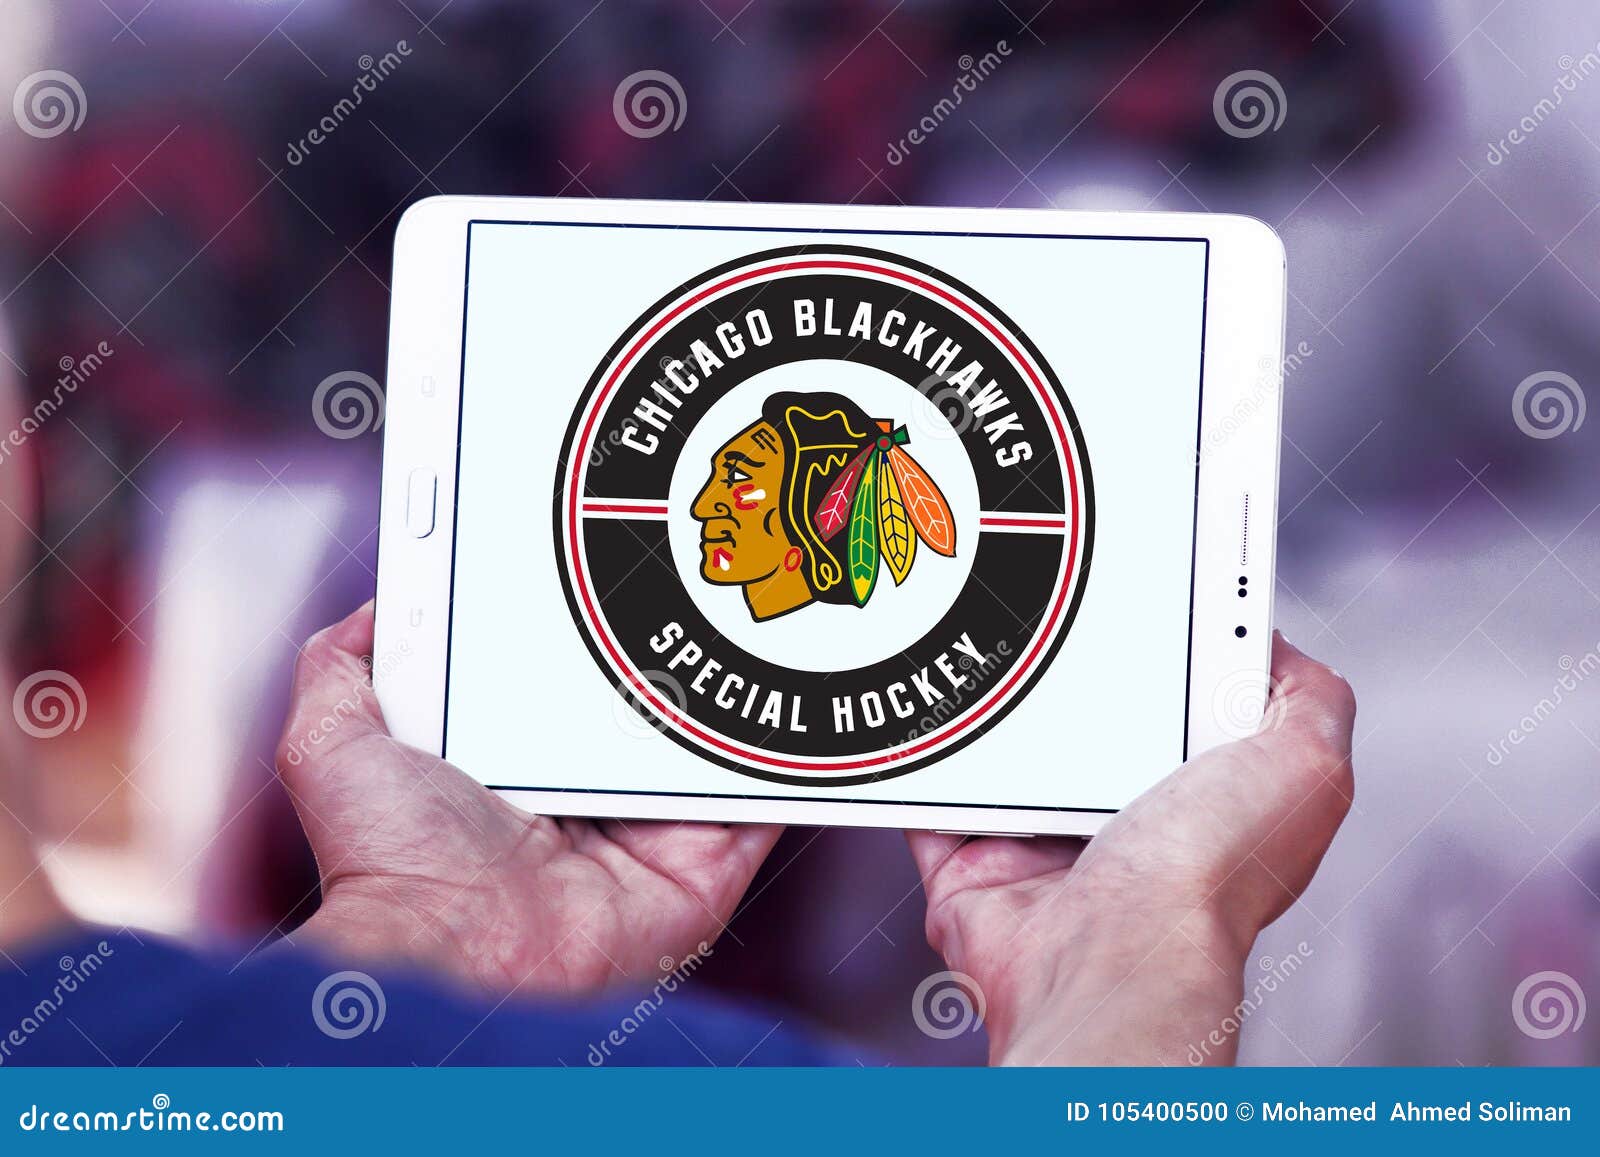 Chicago Blackhawks Hockey Team Logo Editorial Image ...